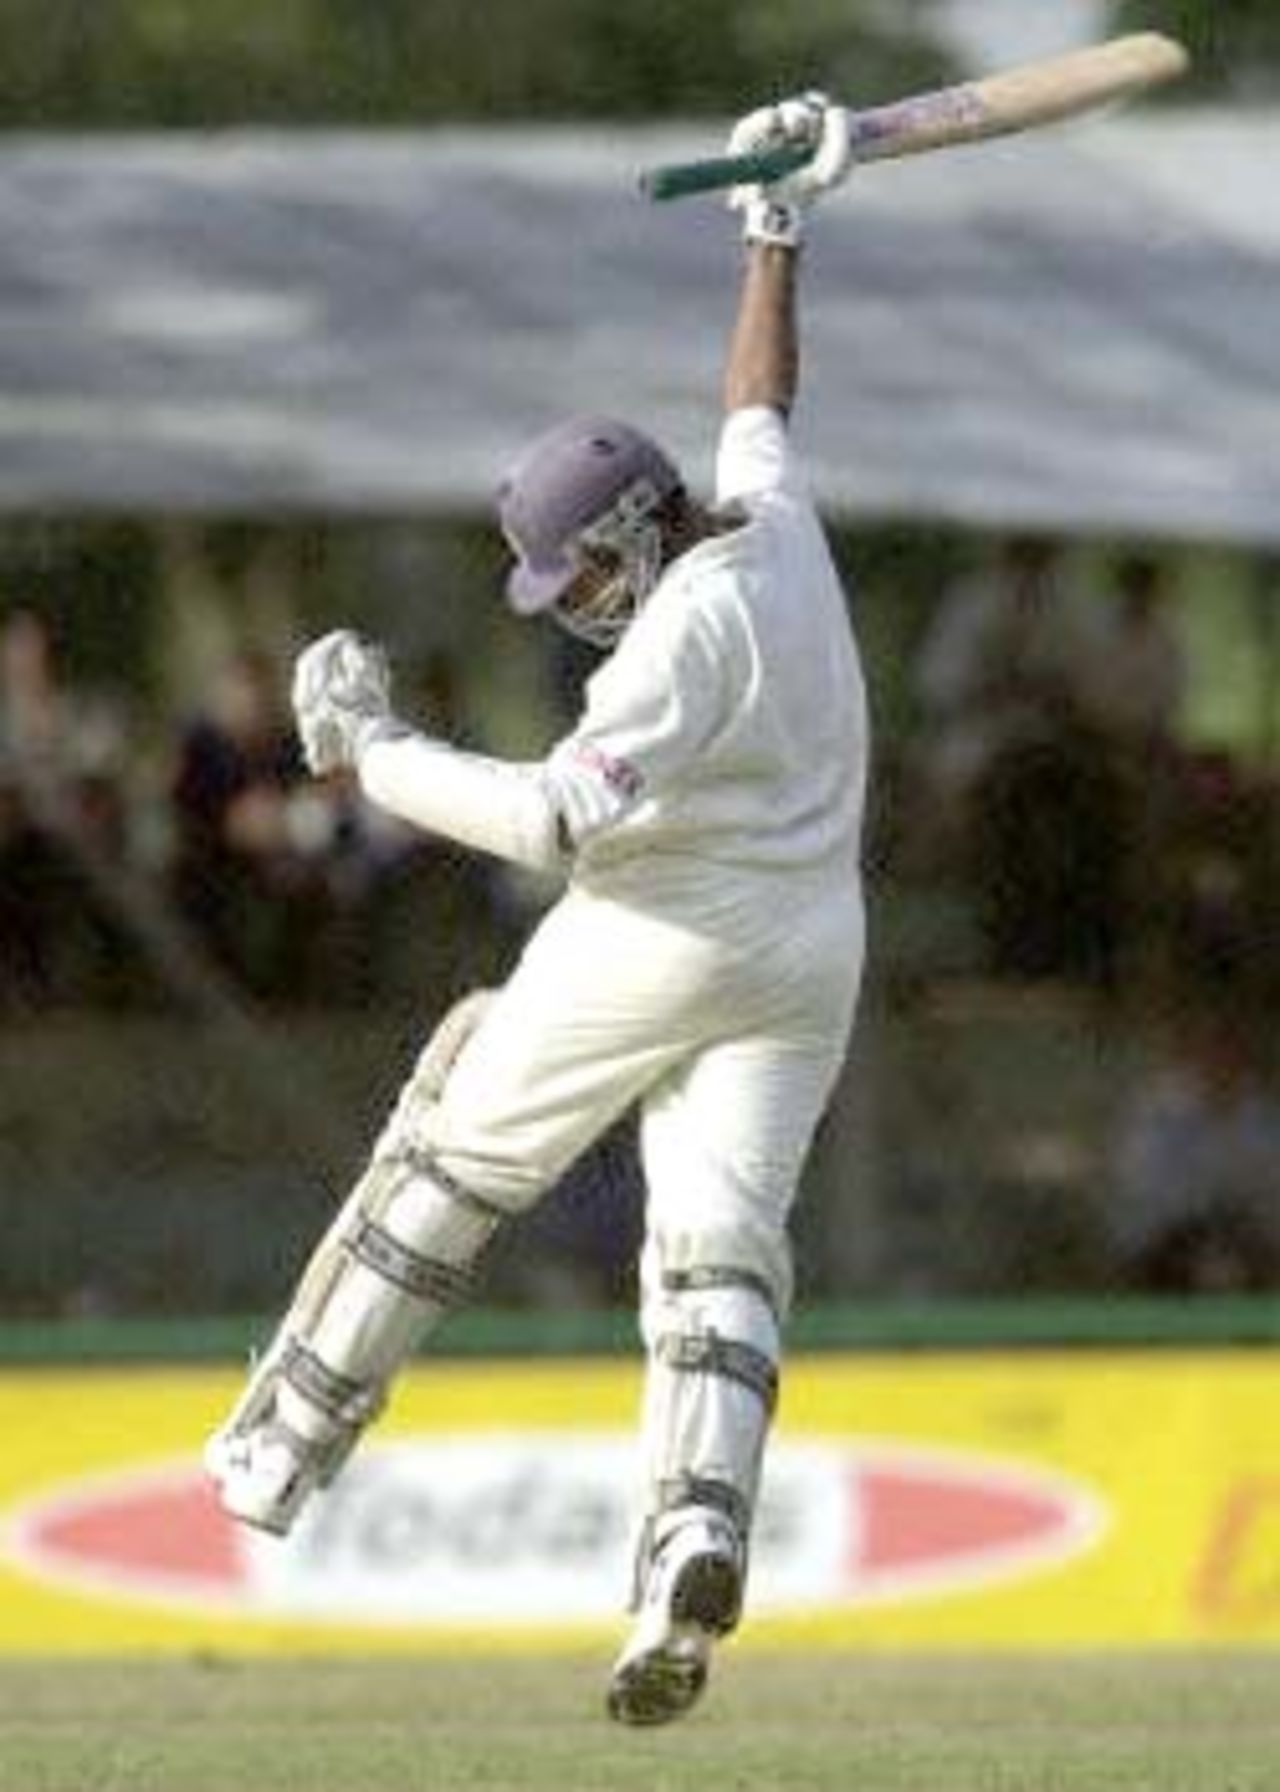 22 August 2001: India in Sri Lanka 2001, 2nd Test, Sri Lanka v India, Asgiriya Stadium, 22-26 August 2001, (Day 1)